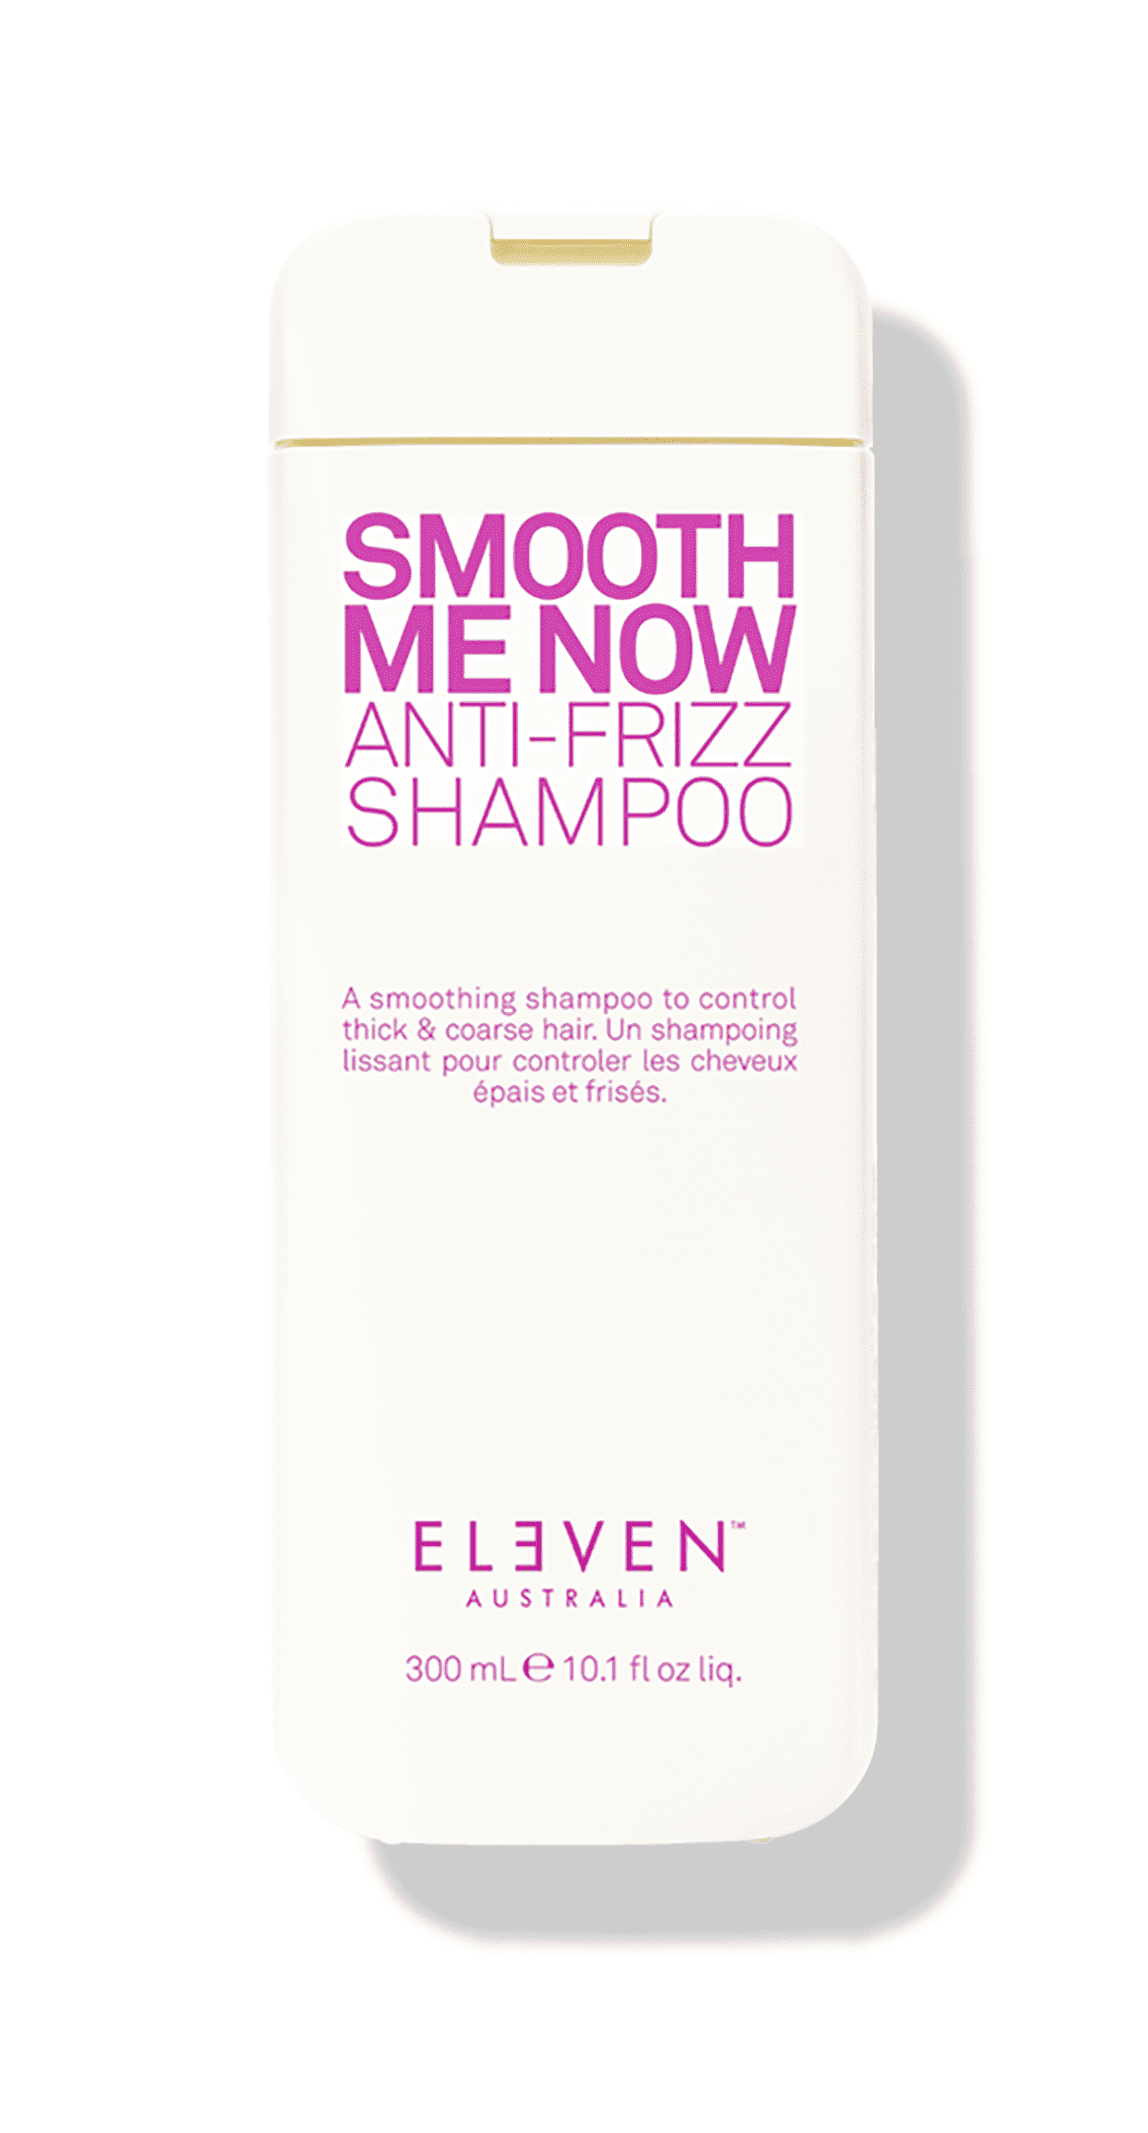 Smooth Me Now Anti-Frizz Shampoo - 300ml - ELEVEN Australia